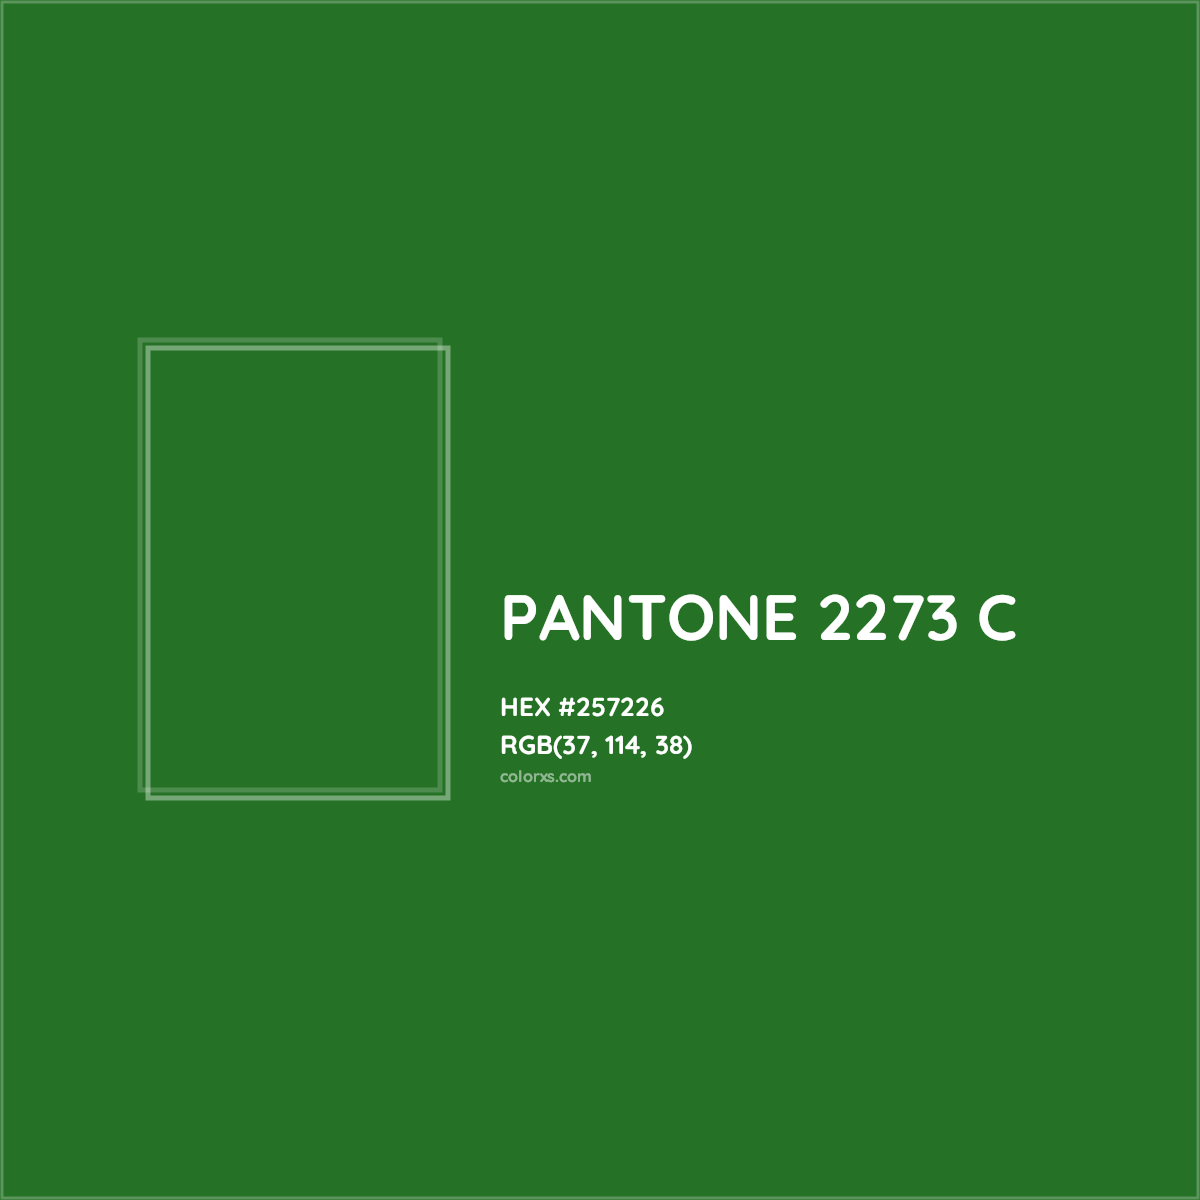 HEX #257226 PANTONE 2273 C CMS Pantone PMS - Color Code